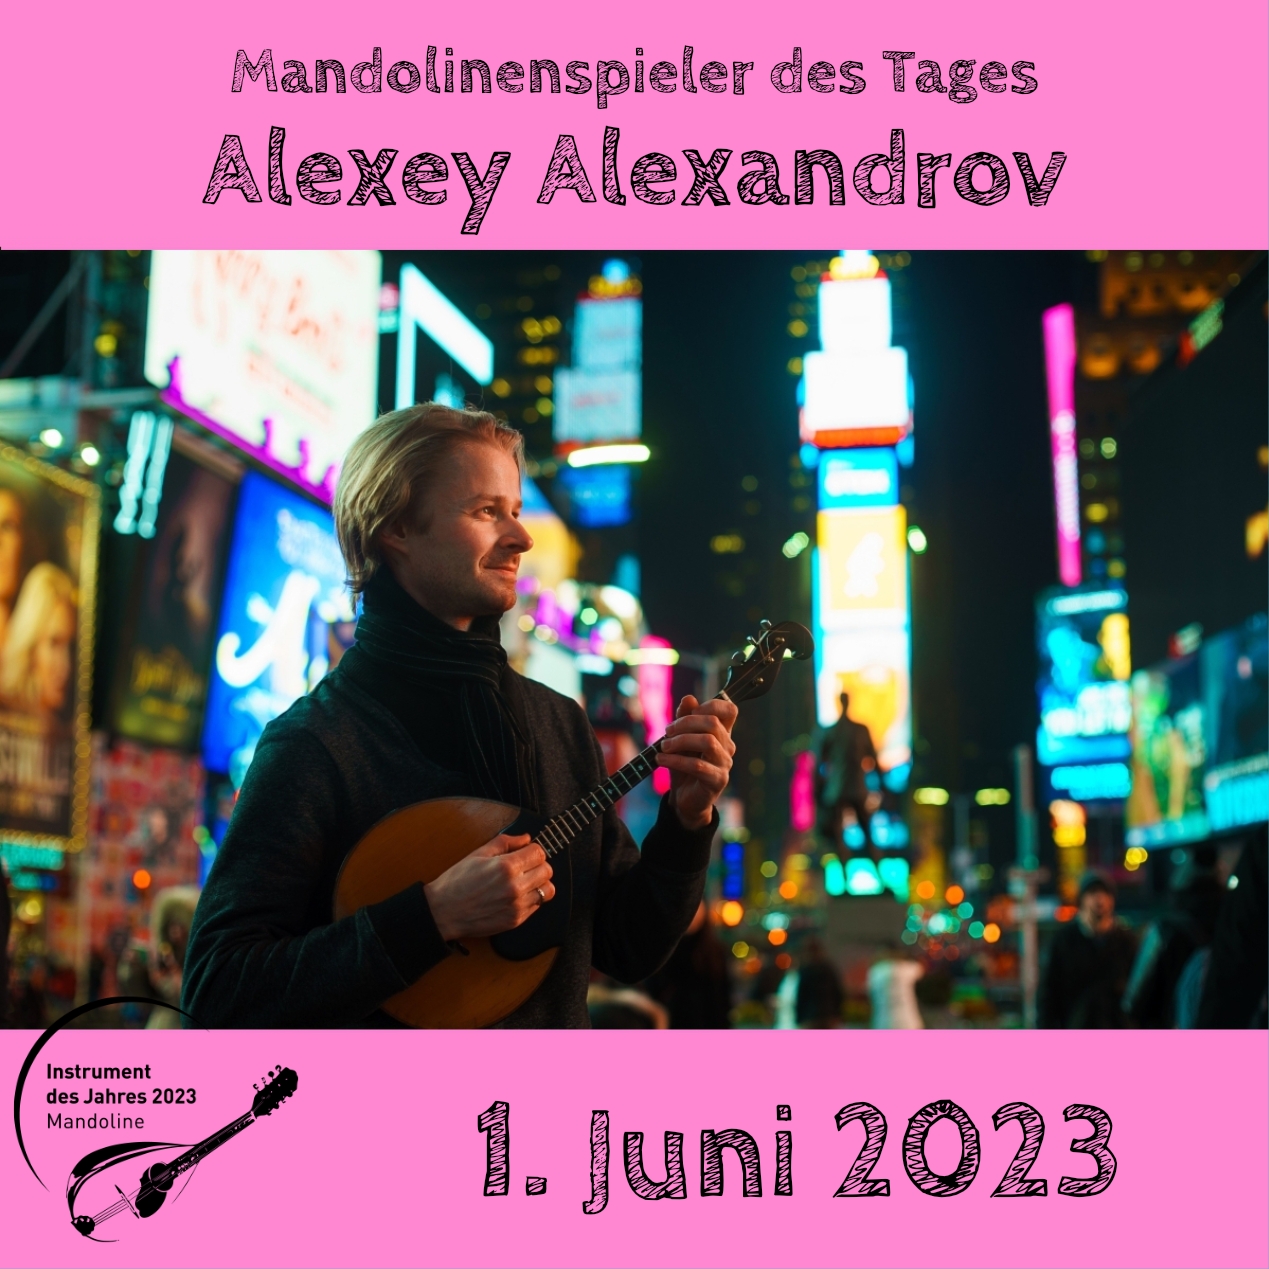 Alexey Alexandrov Domra Mandoline Instrument des Jahres 2023 Mandolinenspieler Mandolinenspielerin des Tages